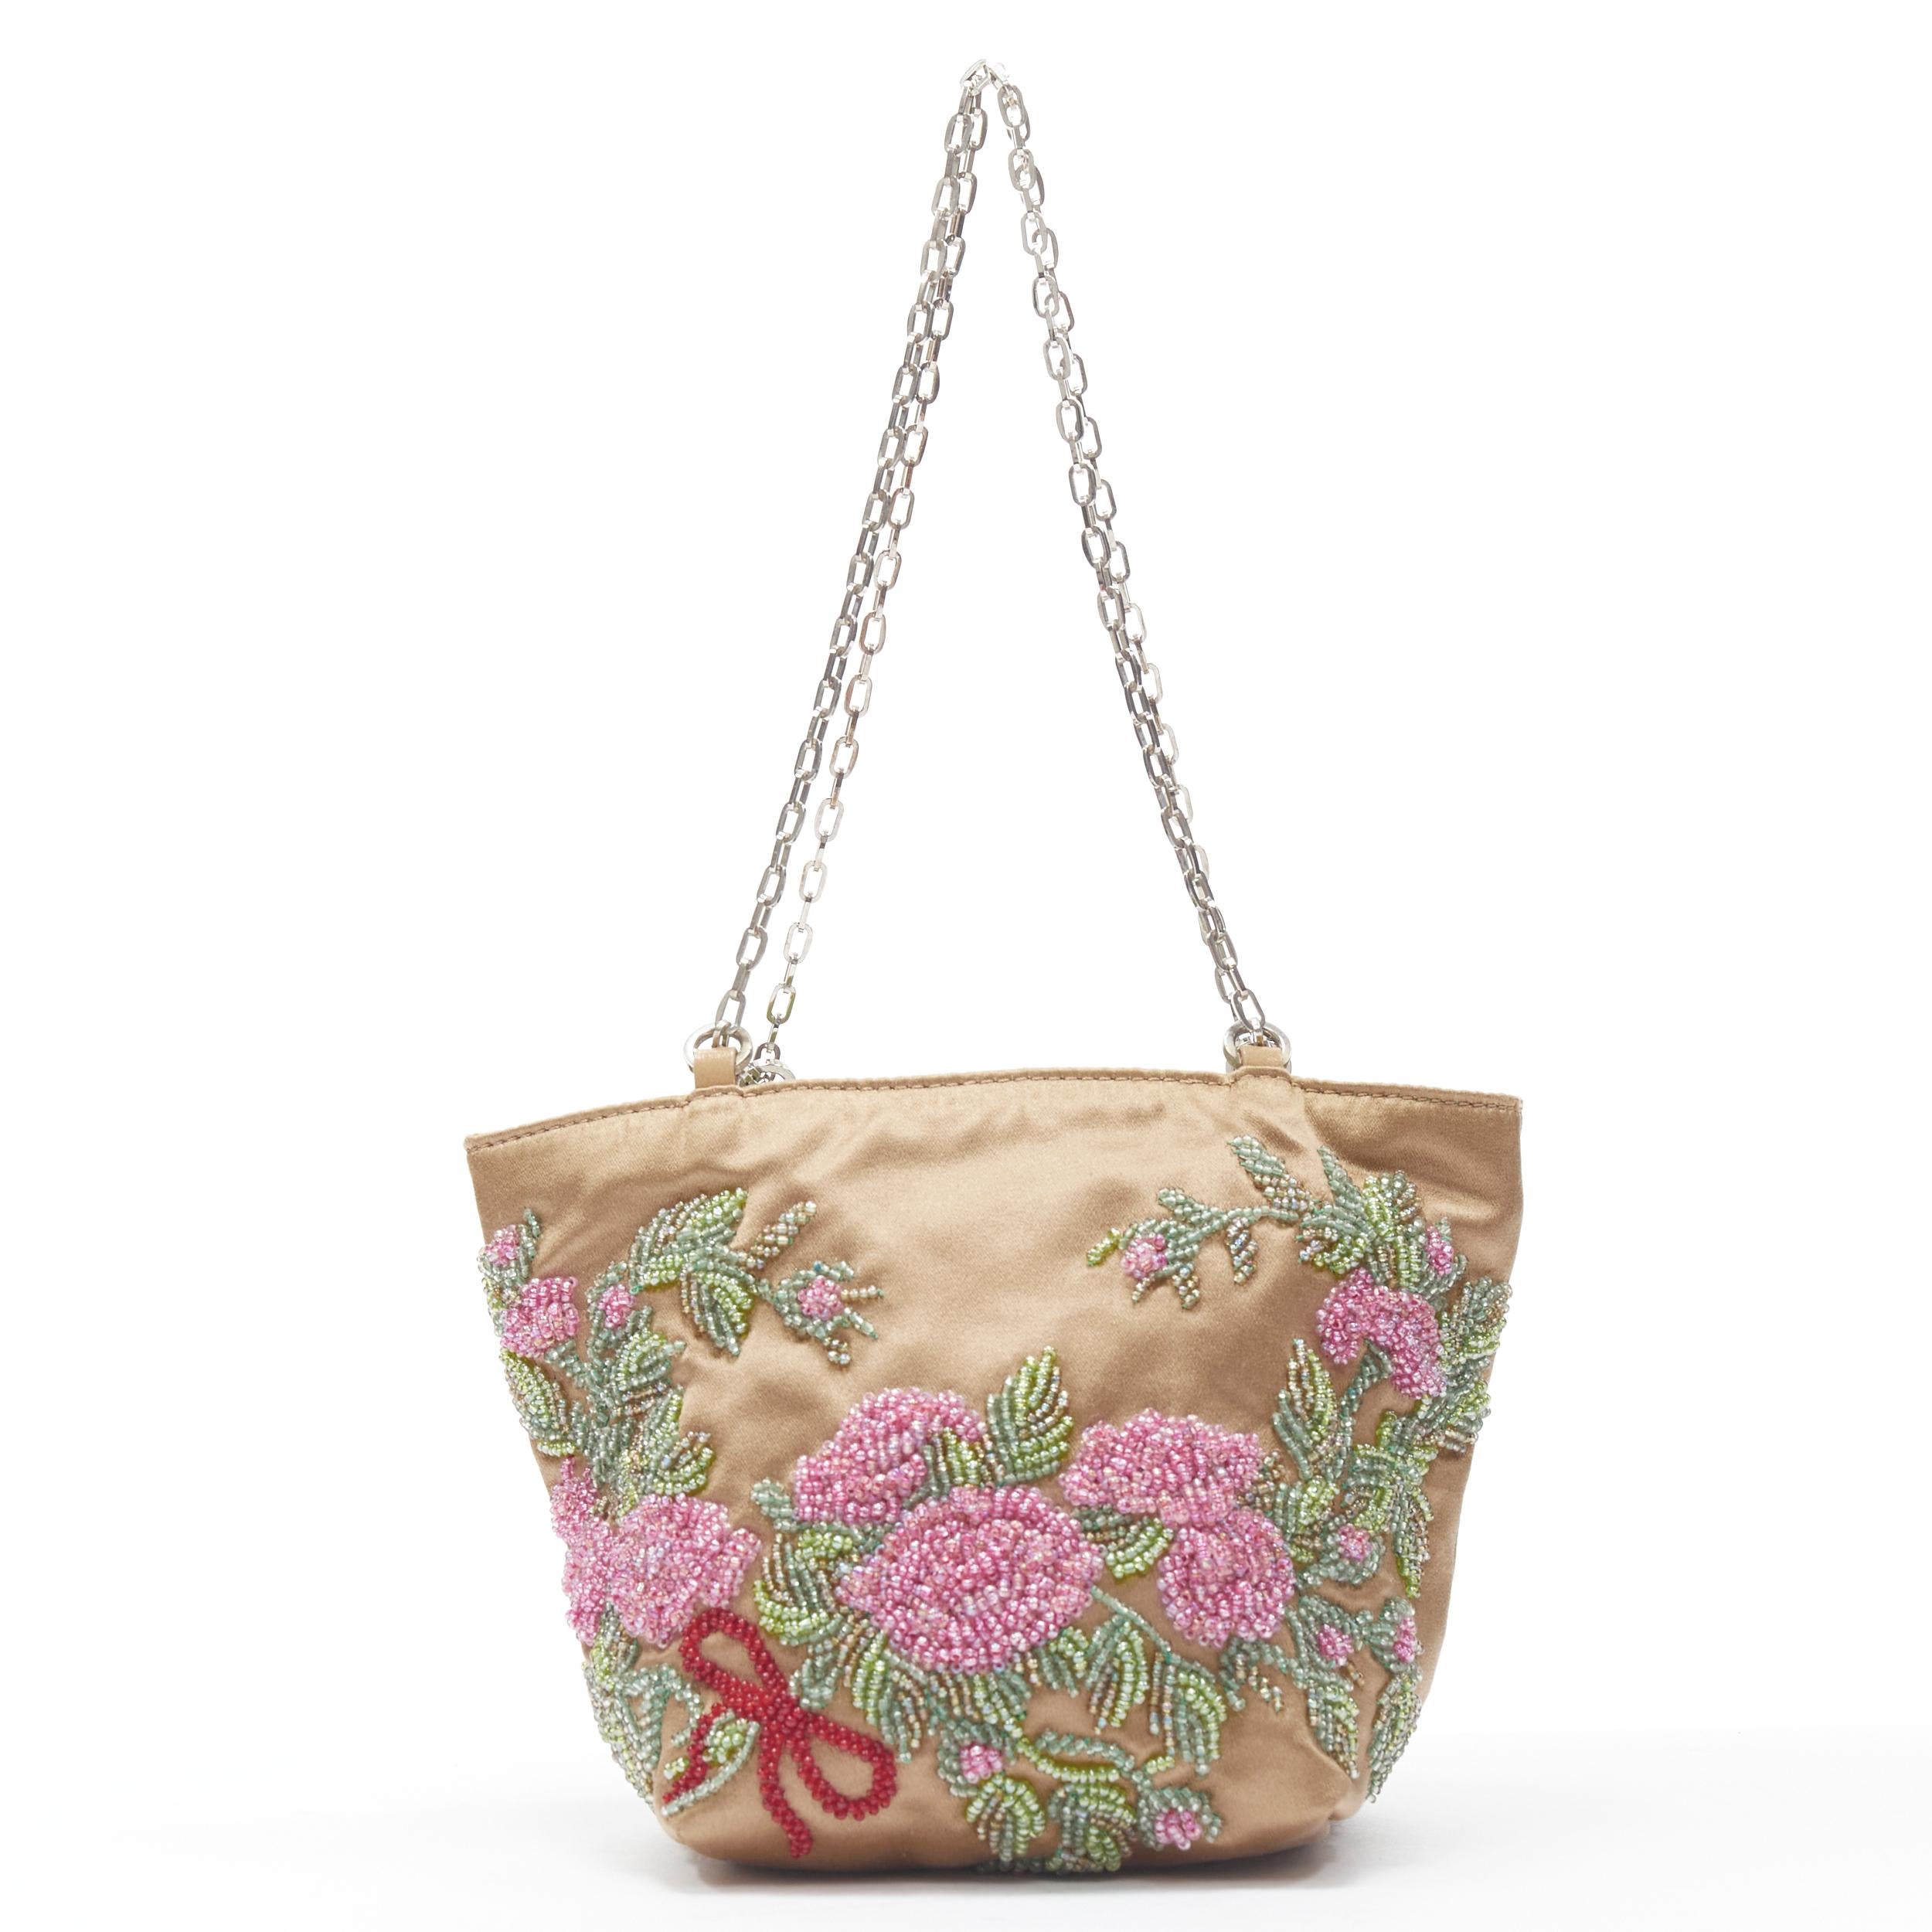 Women's vintage VALENTINO gold satin pink floral embellished chain handle purse bag